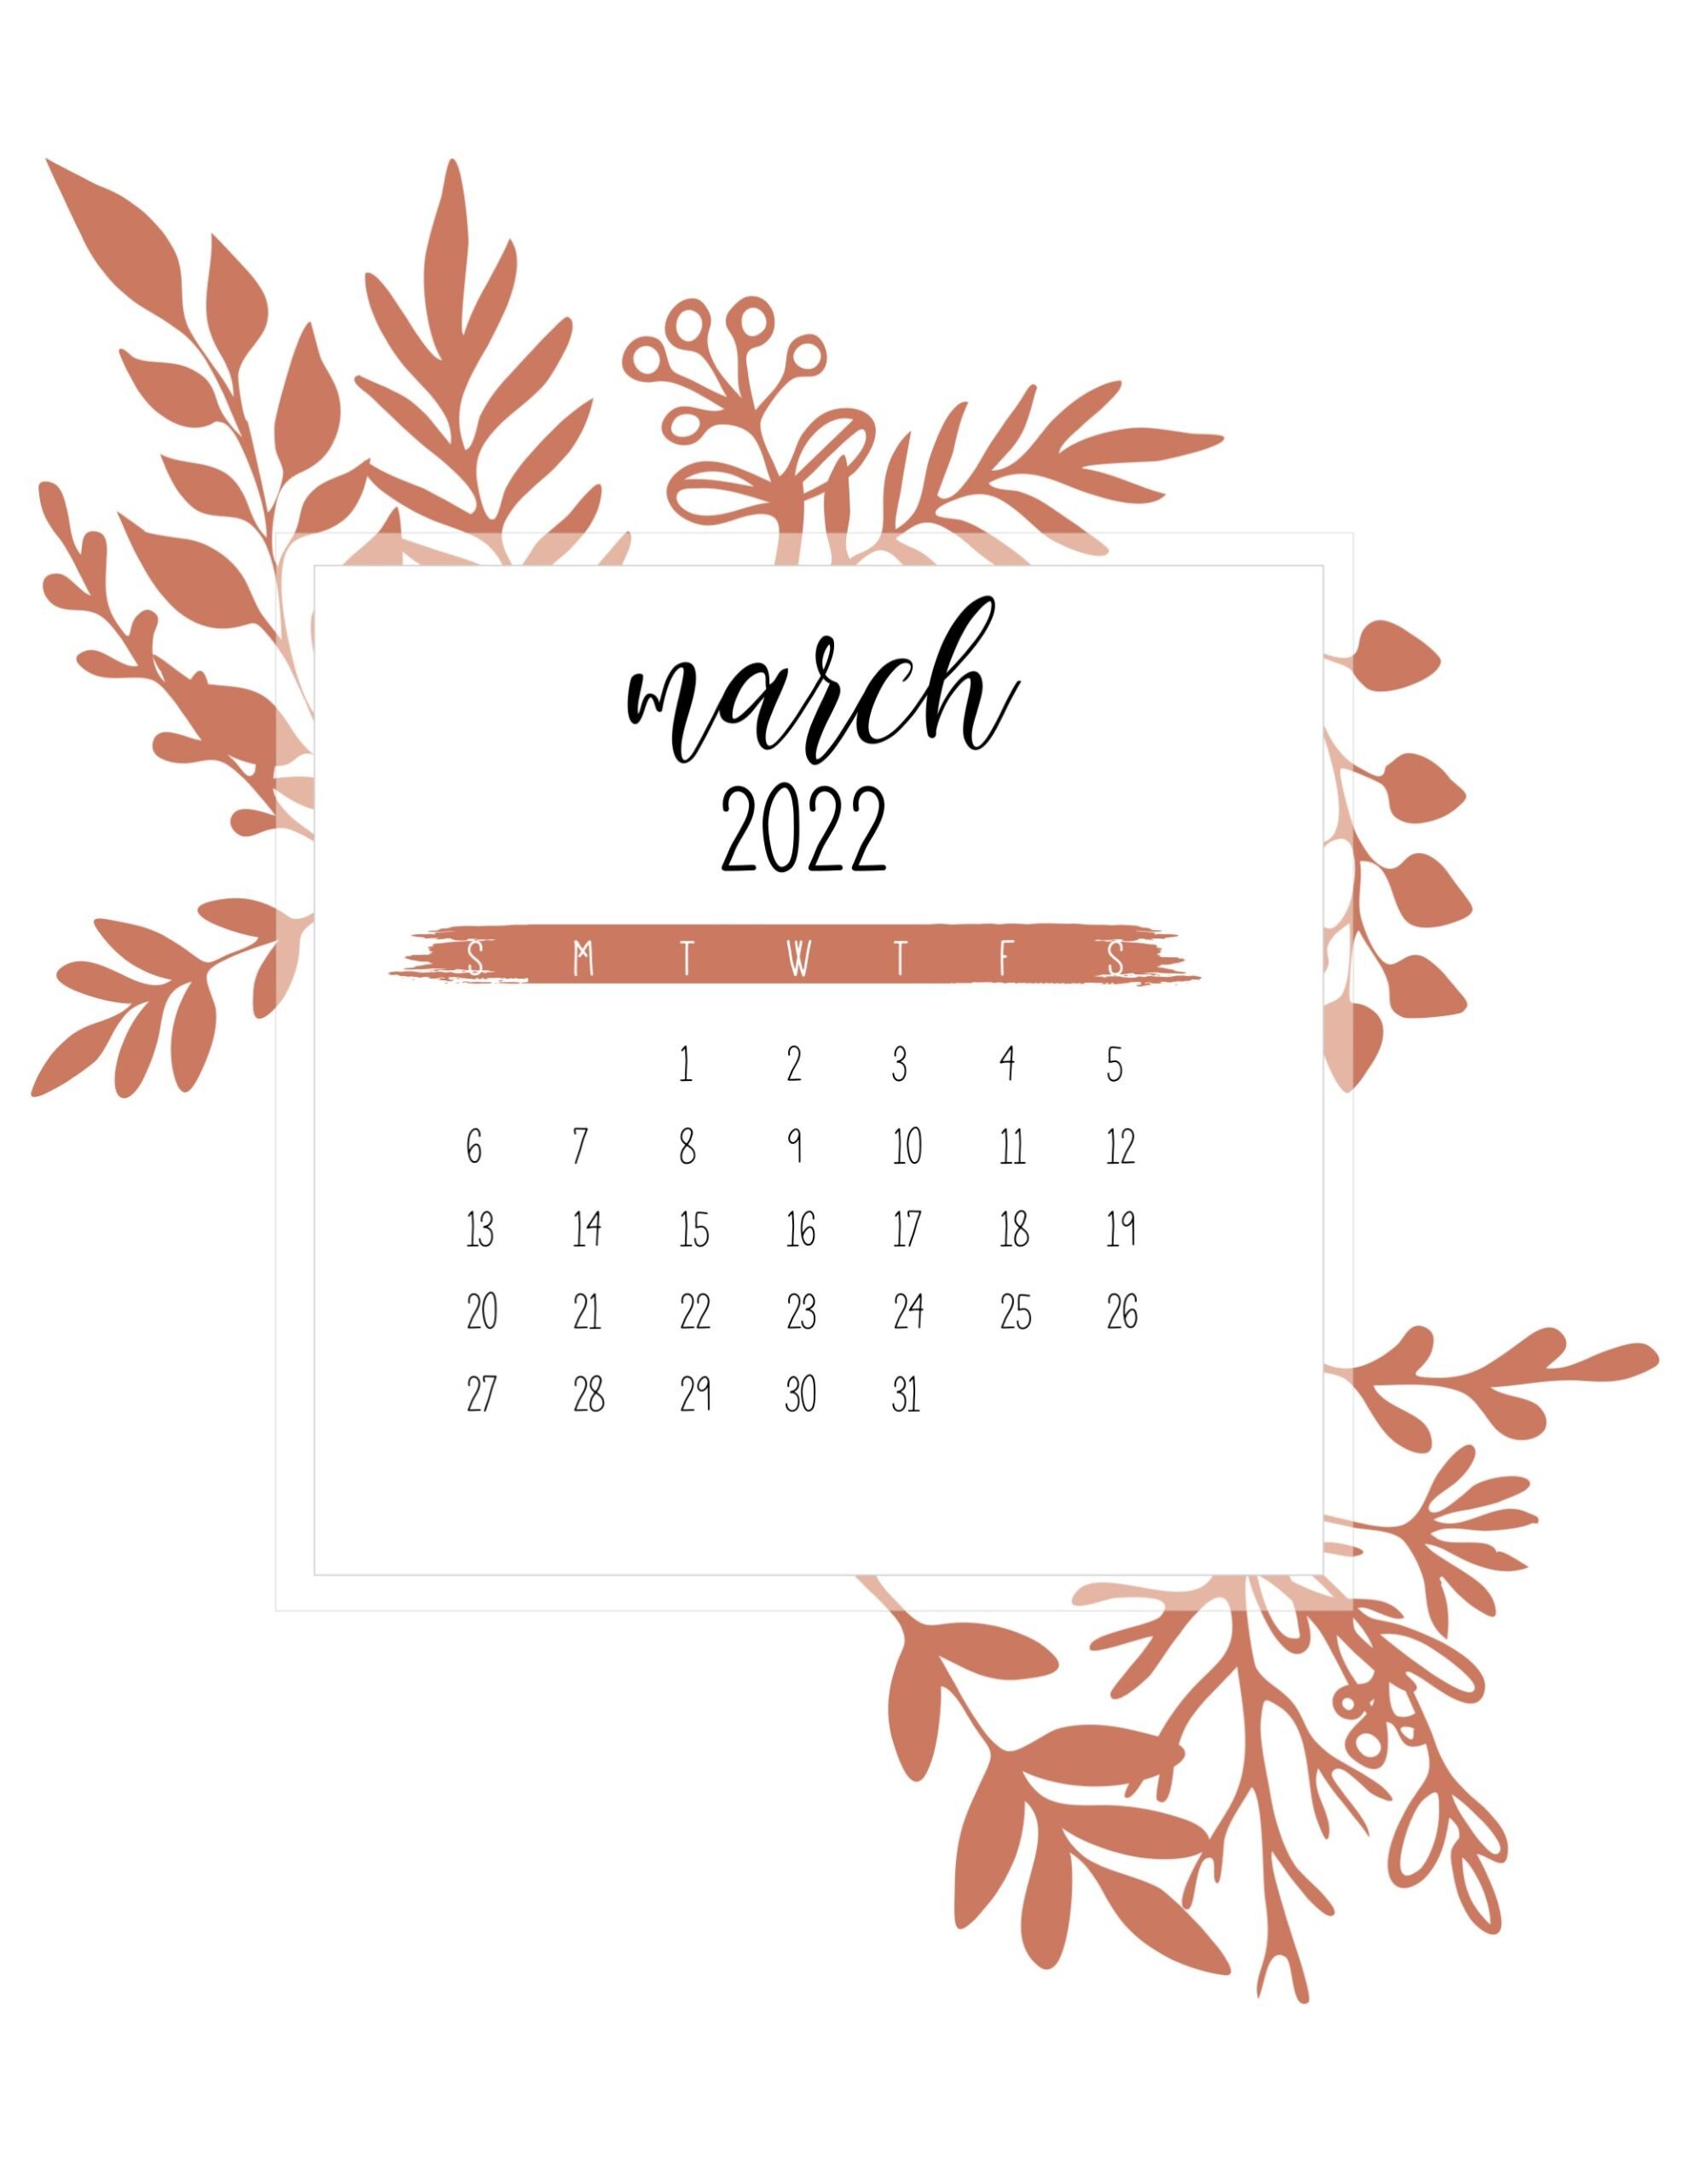 March 2023 Calendar Wallpapers  Top Free March 2023 Calendar Backgrounds   WallpaperAccess